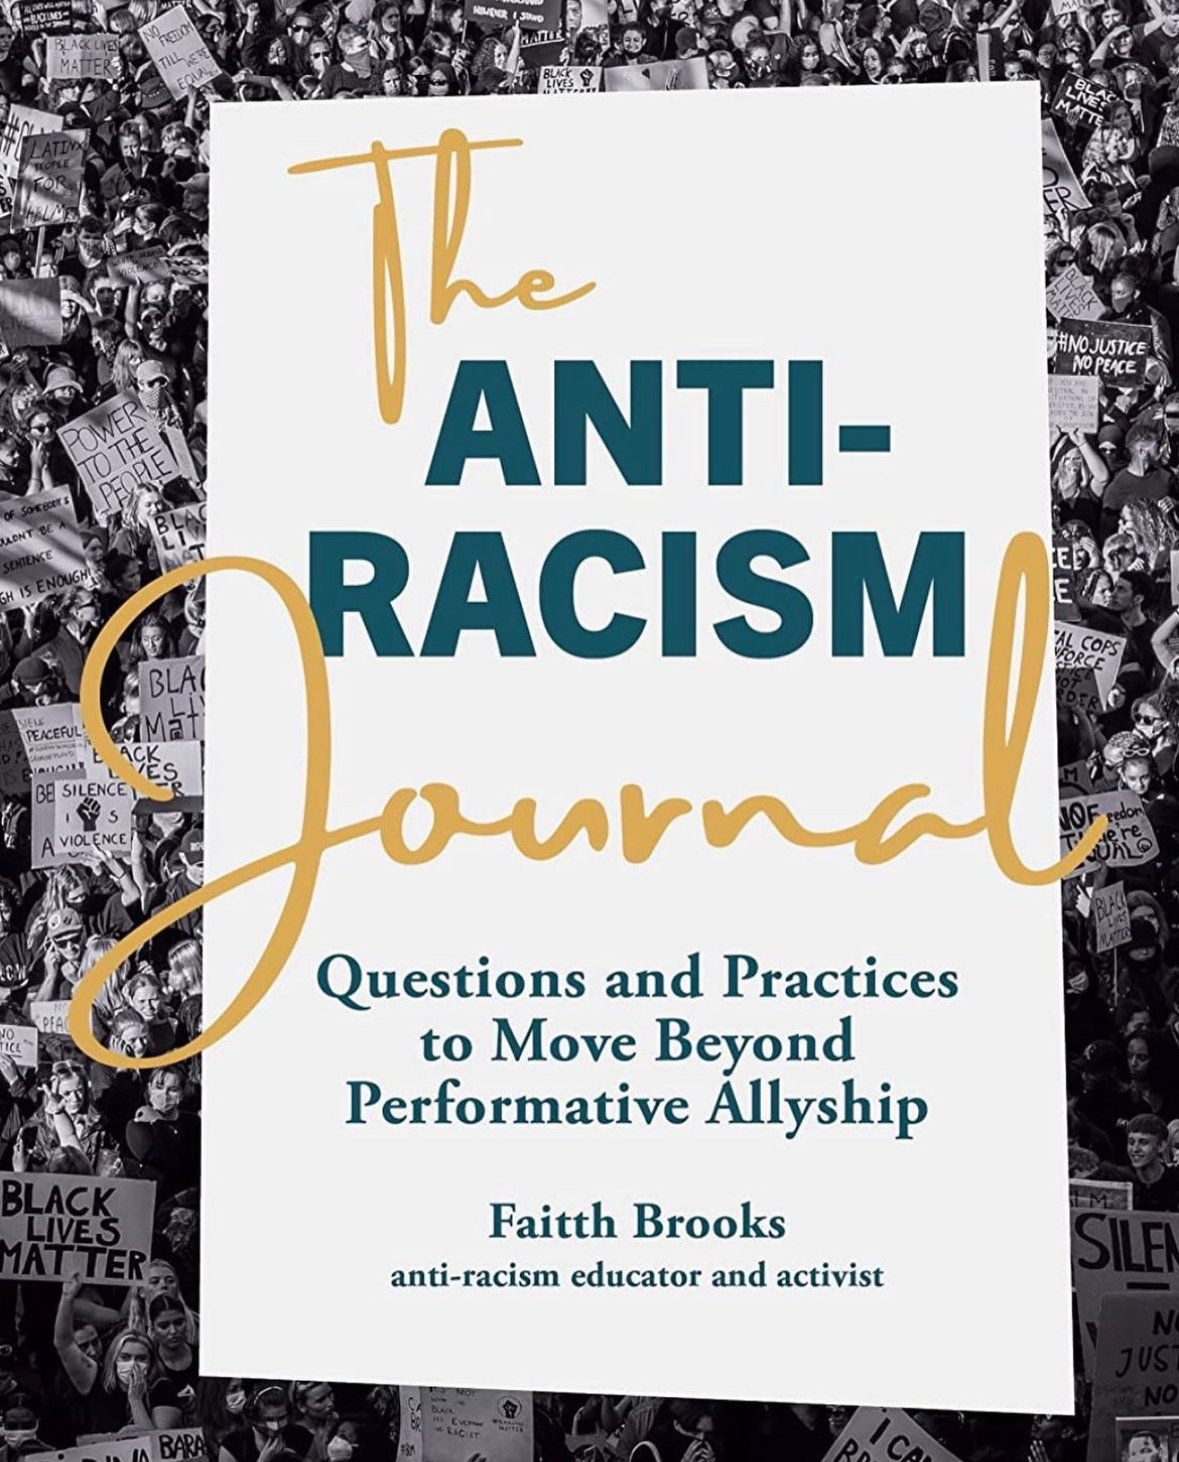 faithbrooks anti racism book.jpg